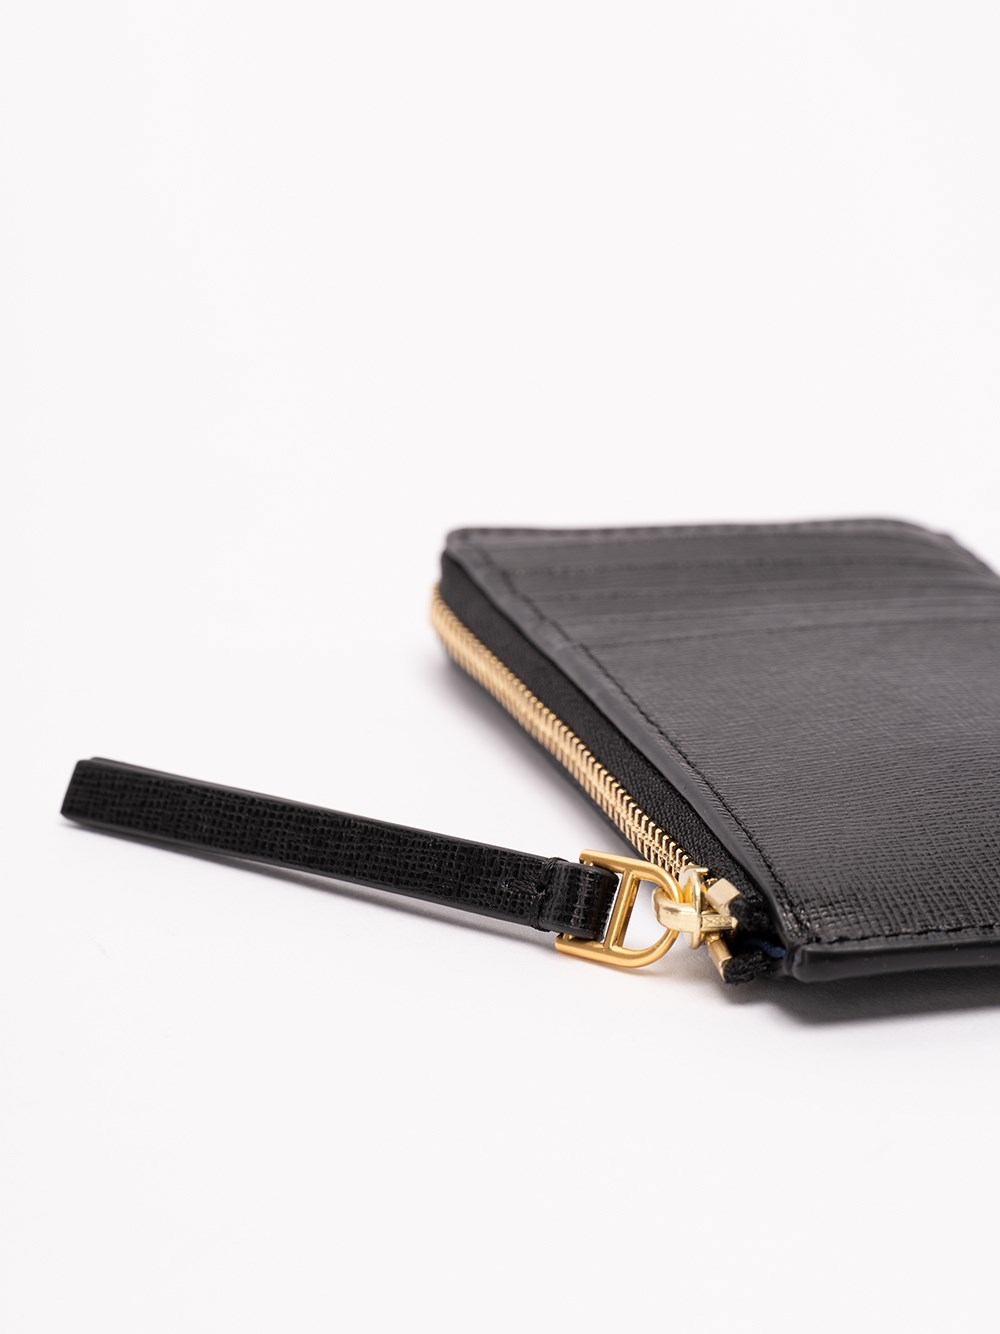 TORY BURCH Robinson Card Case Wallet Top Zip “ Missing Zipper Pull”